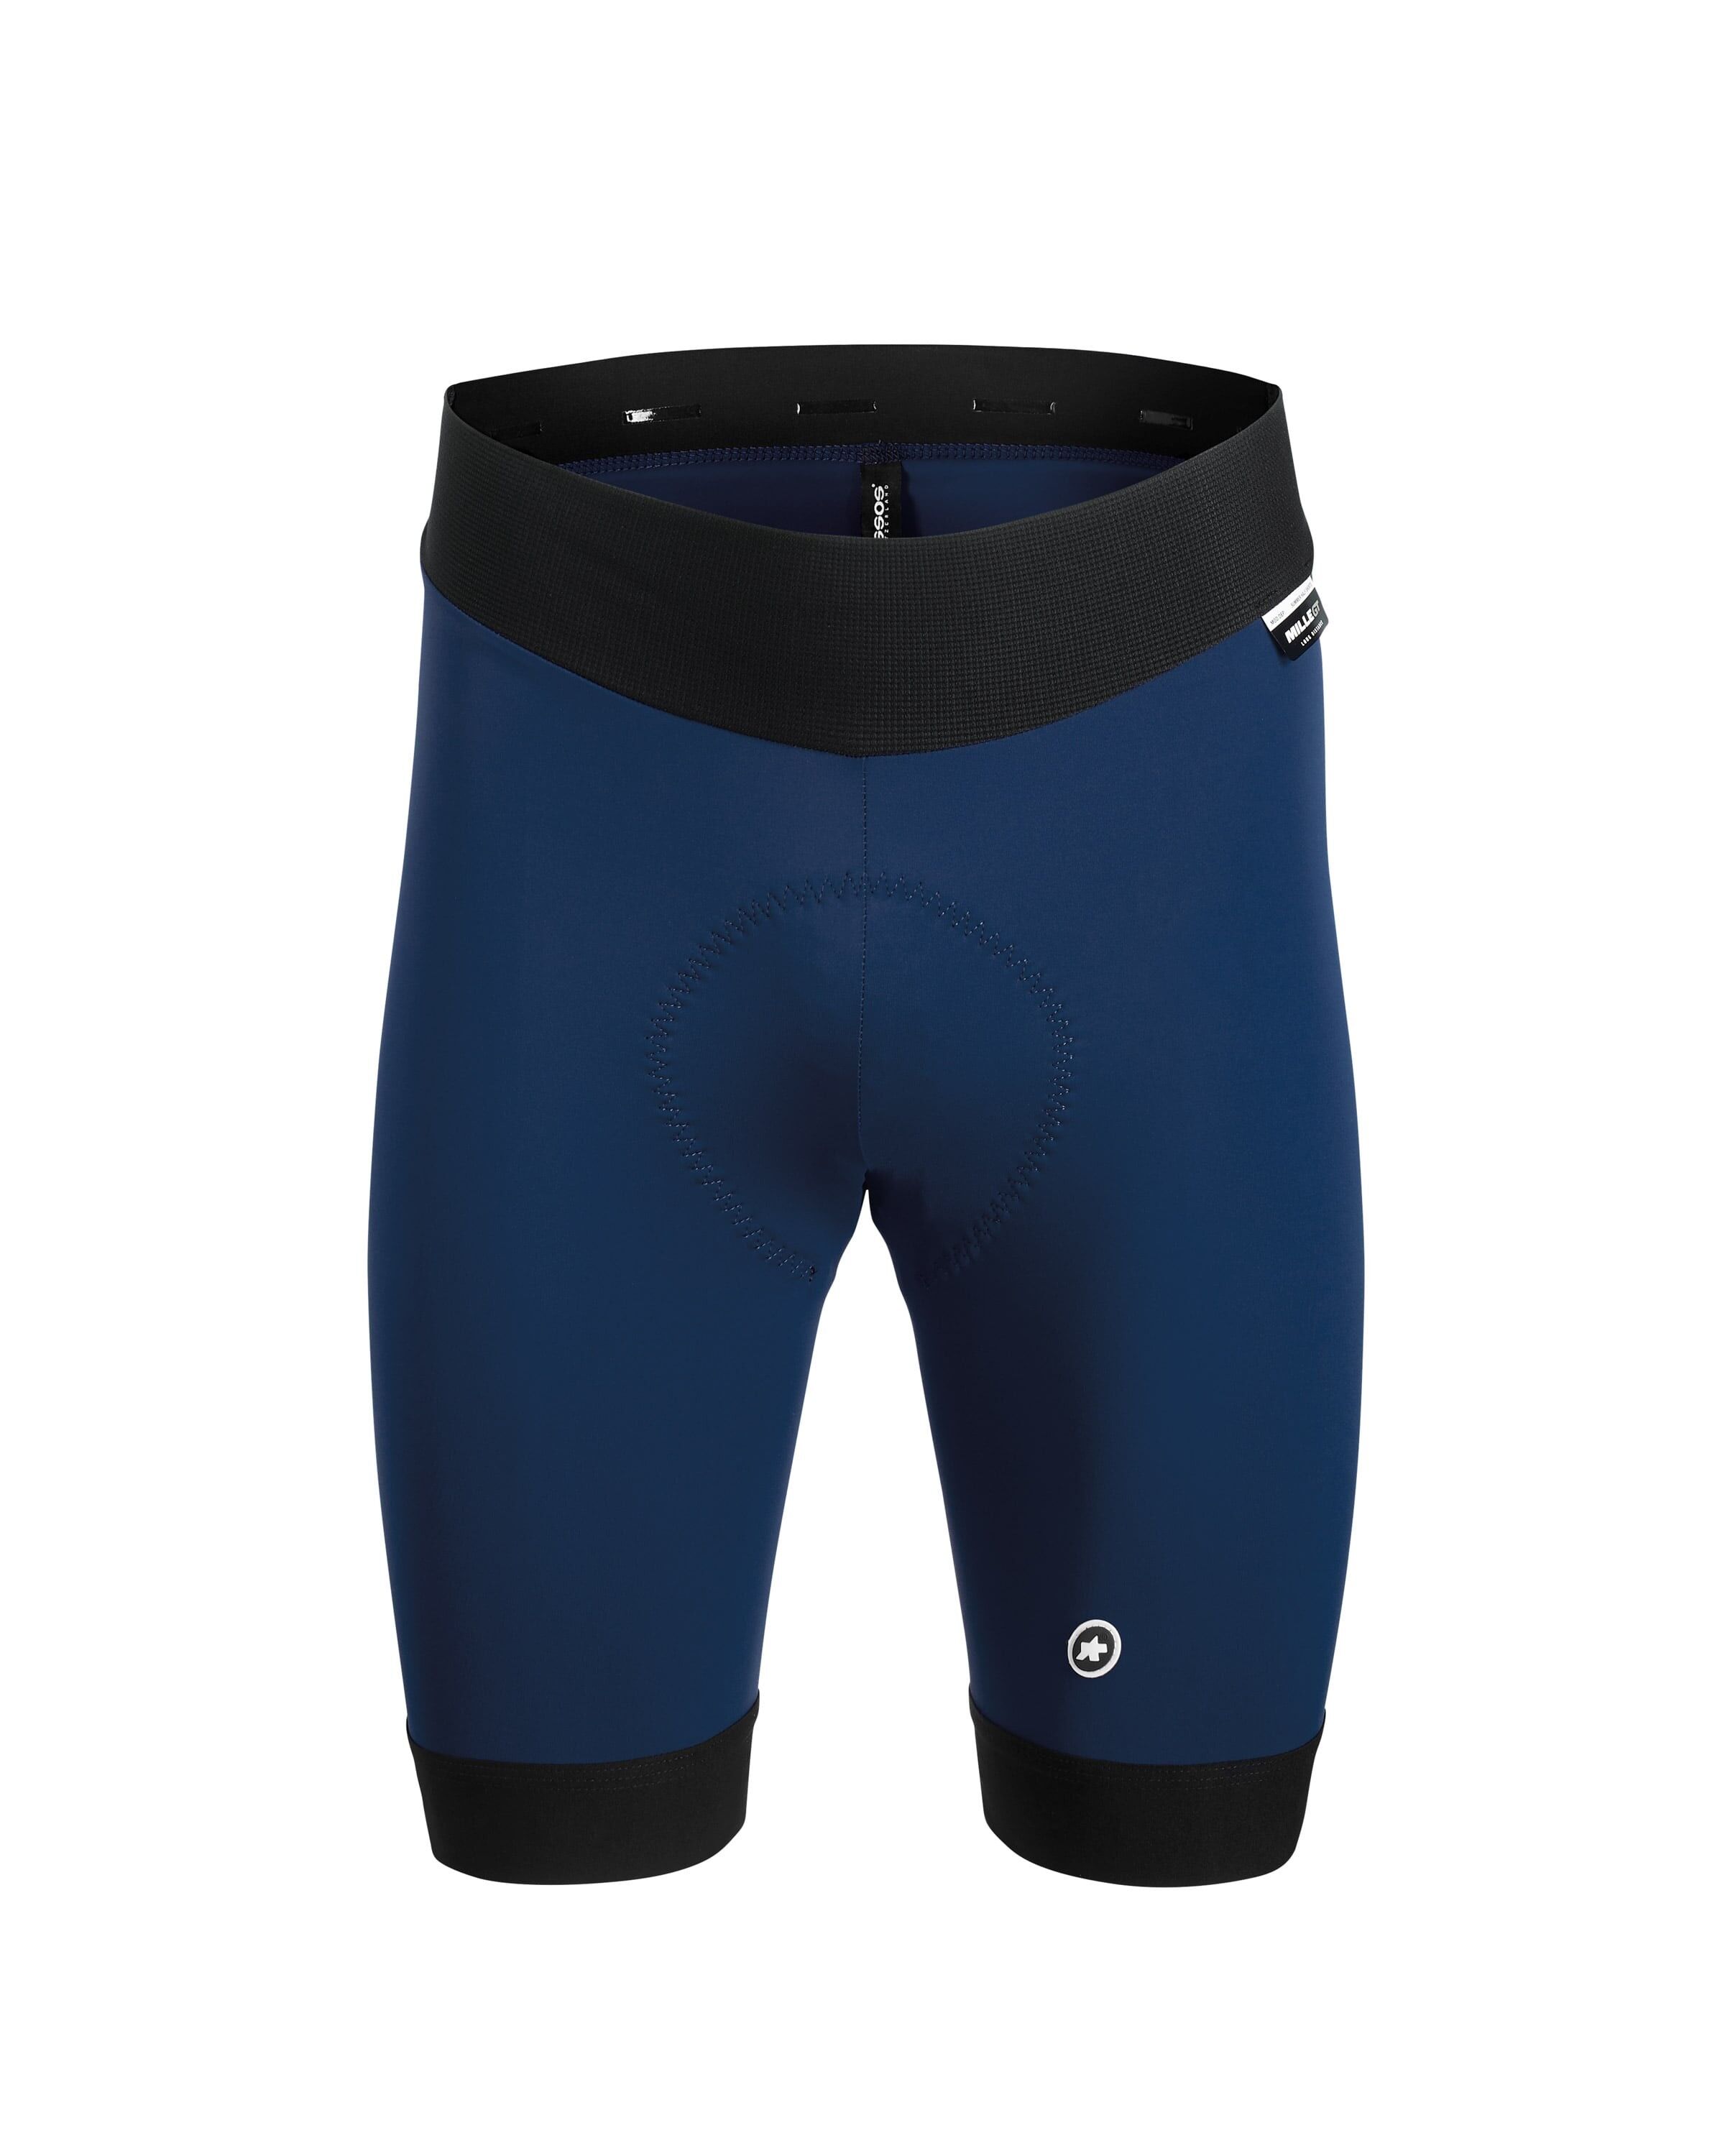 Assos Mille GT Half Shorts - Cycling shorts - Men's